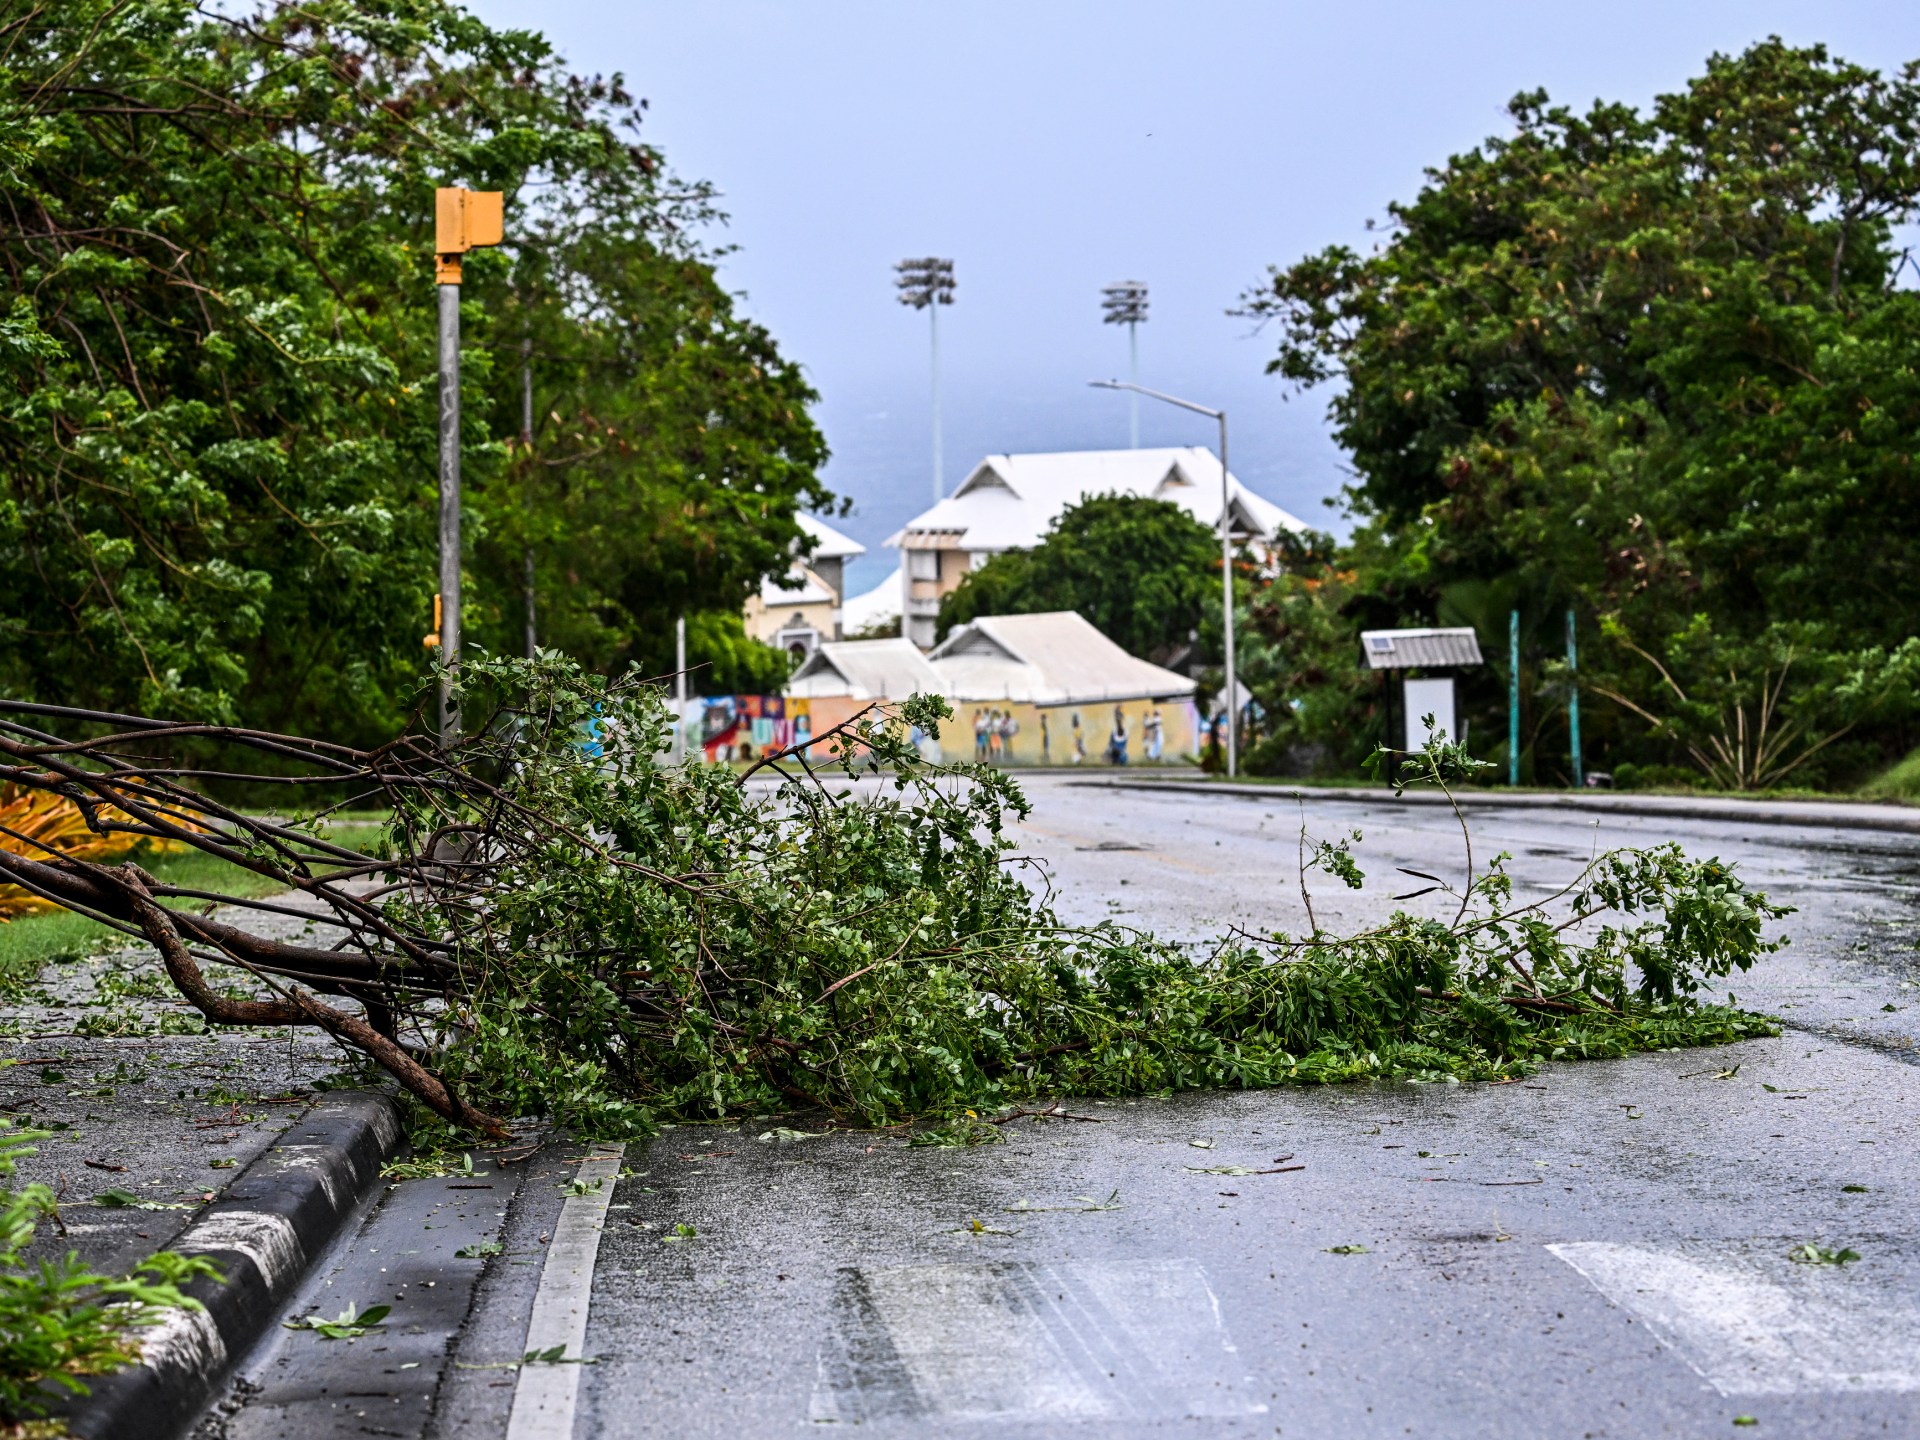 Beryl makes landfall as Category 4 hurricane on island near Grenada | Climate Crisis News